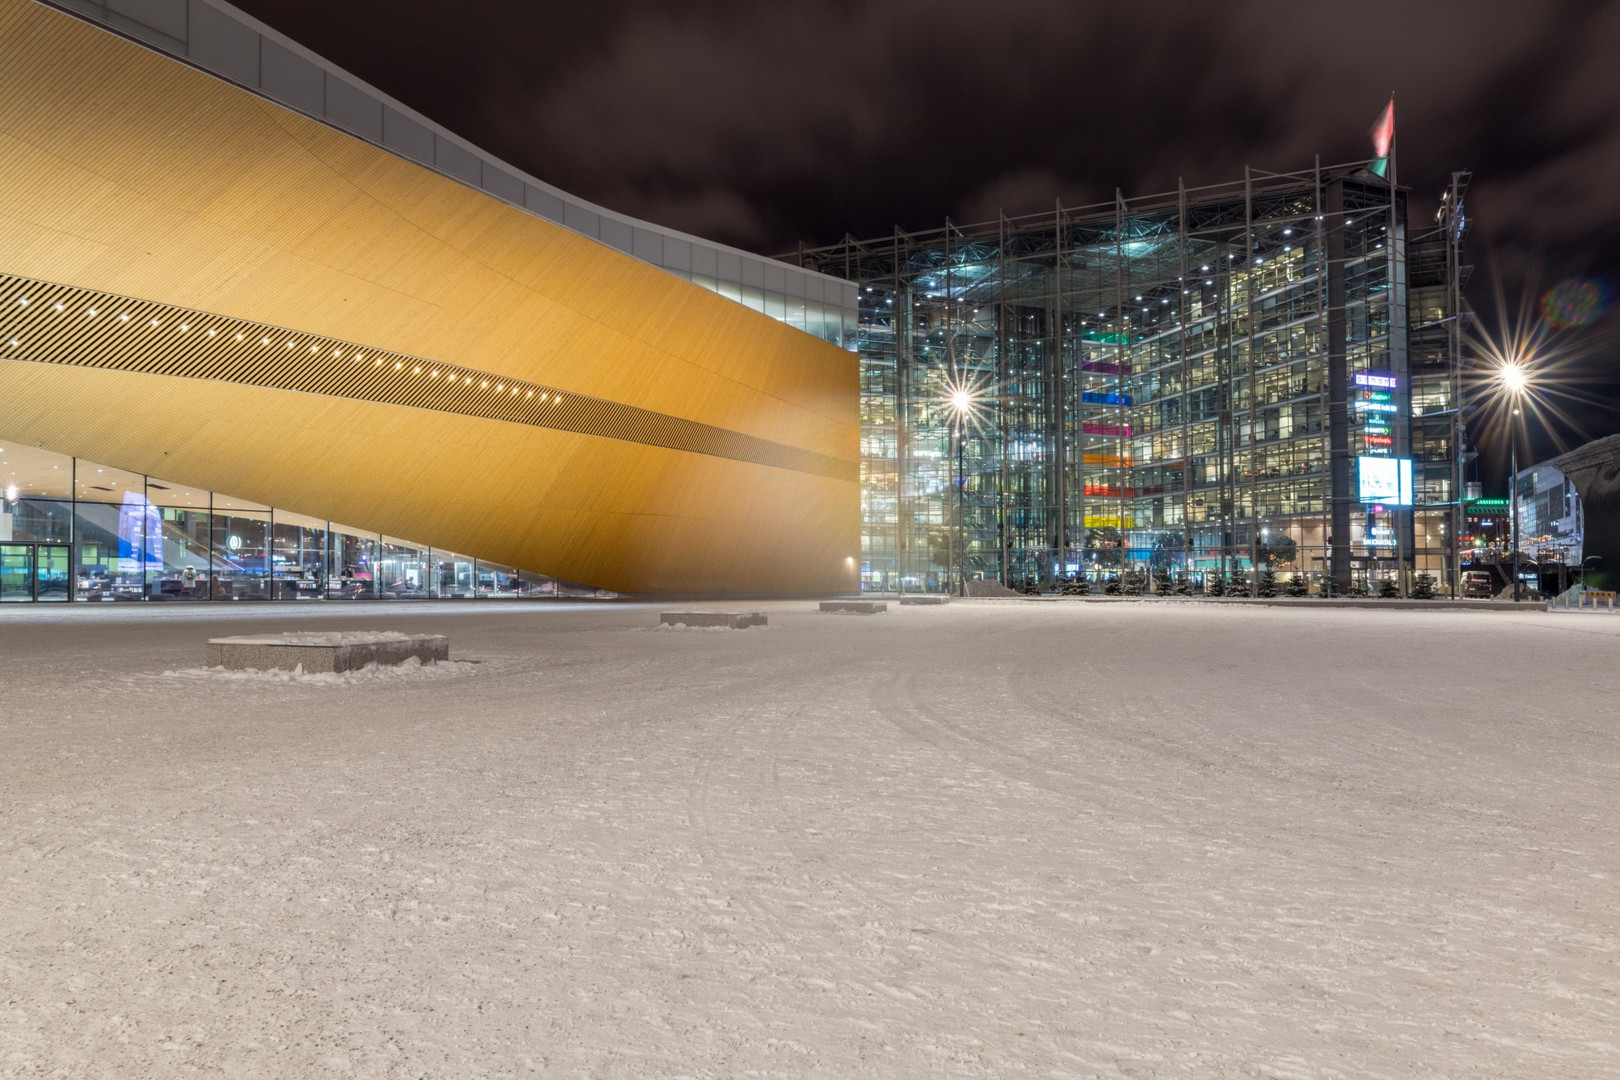 Helsinki - Central library Oodi